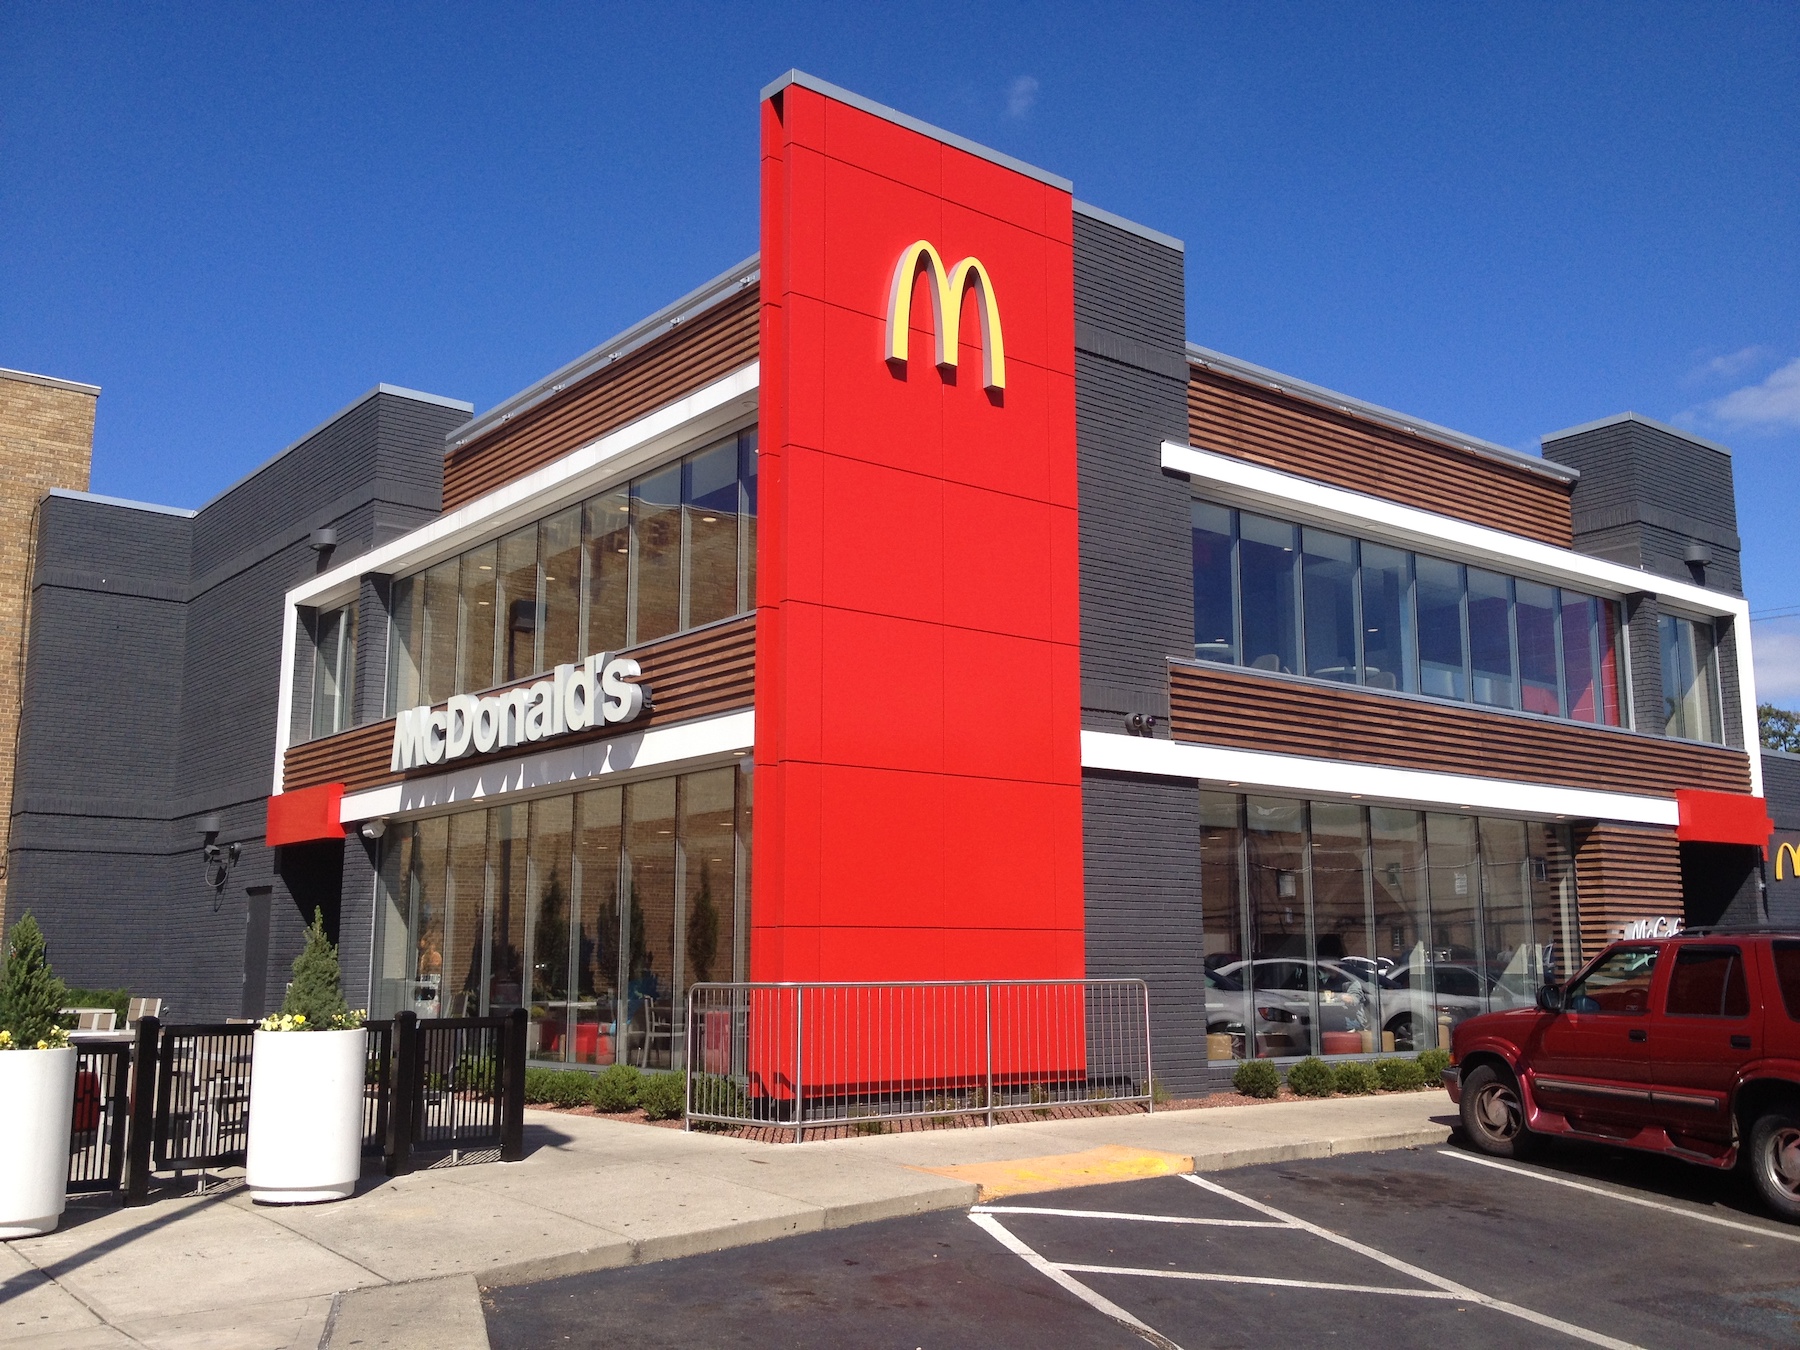 An 8-unit McDonald’s franchisee declares bankruptcy